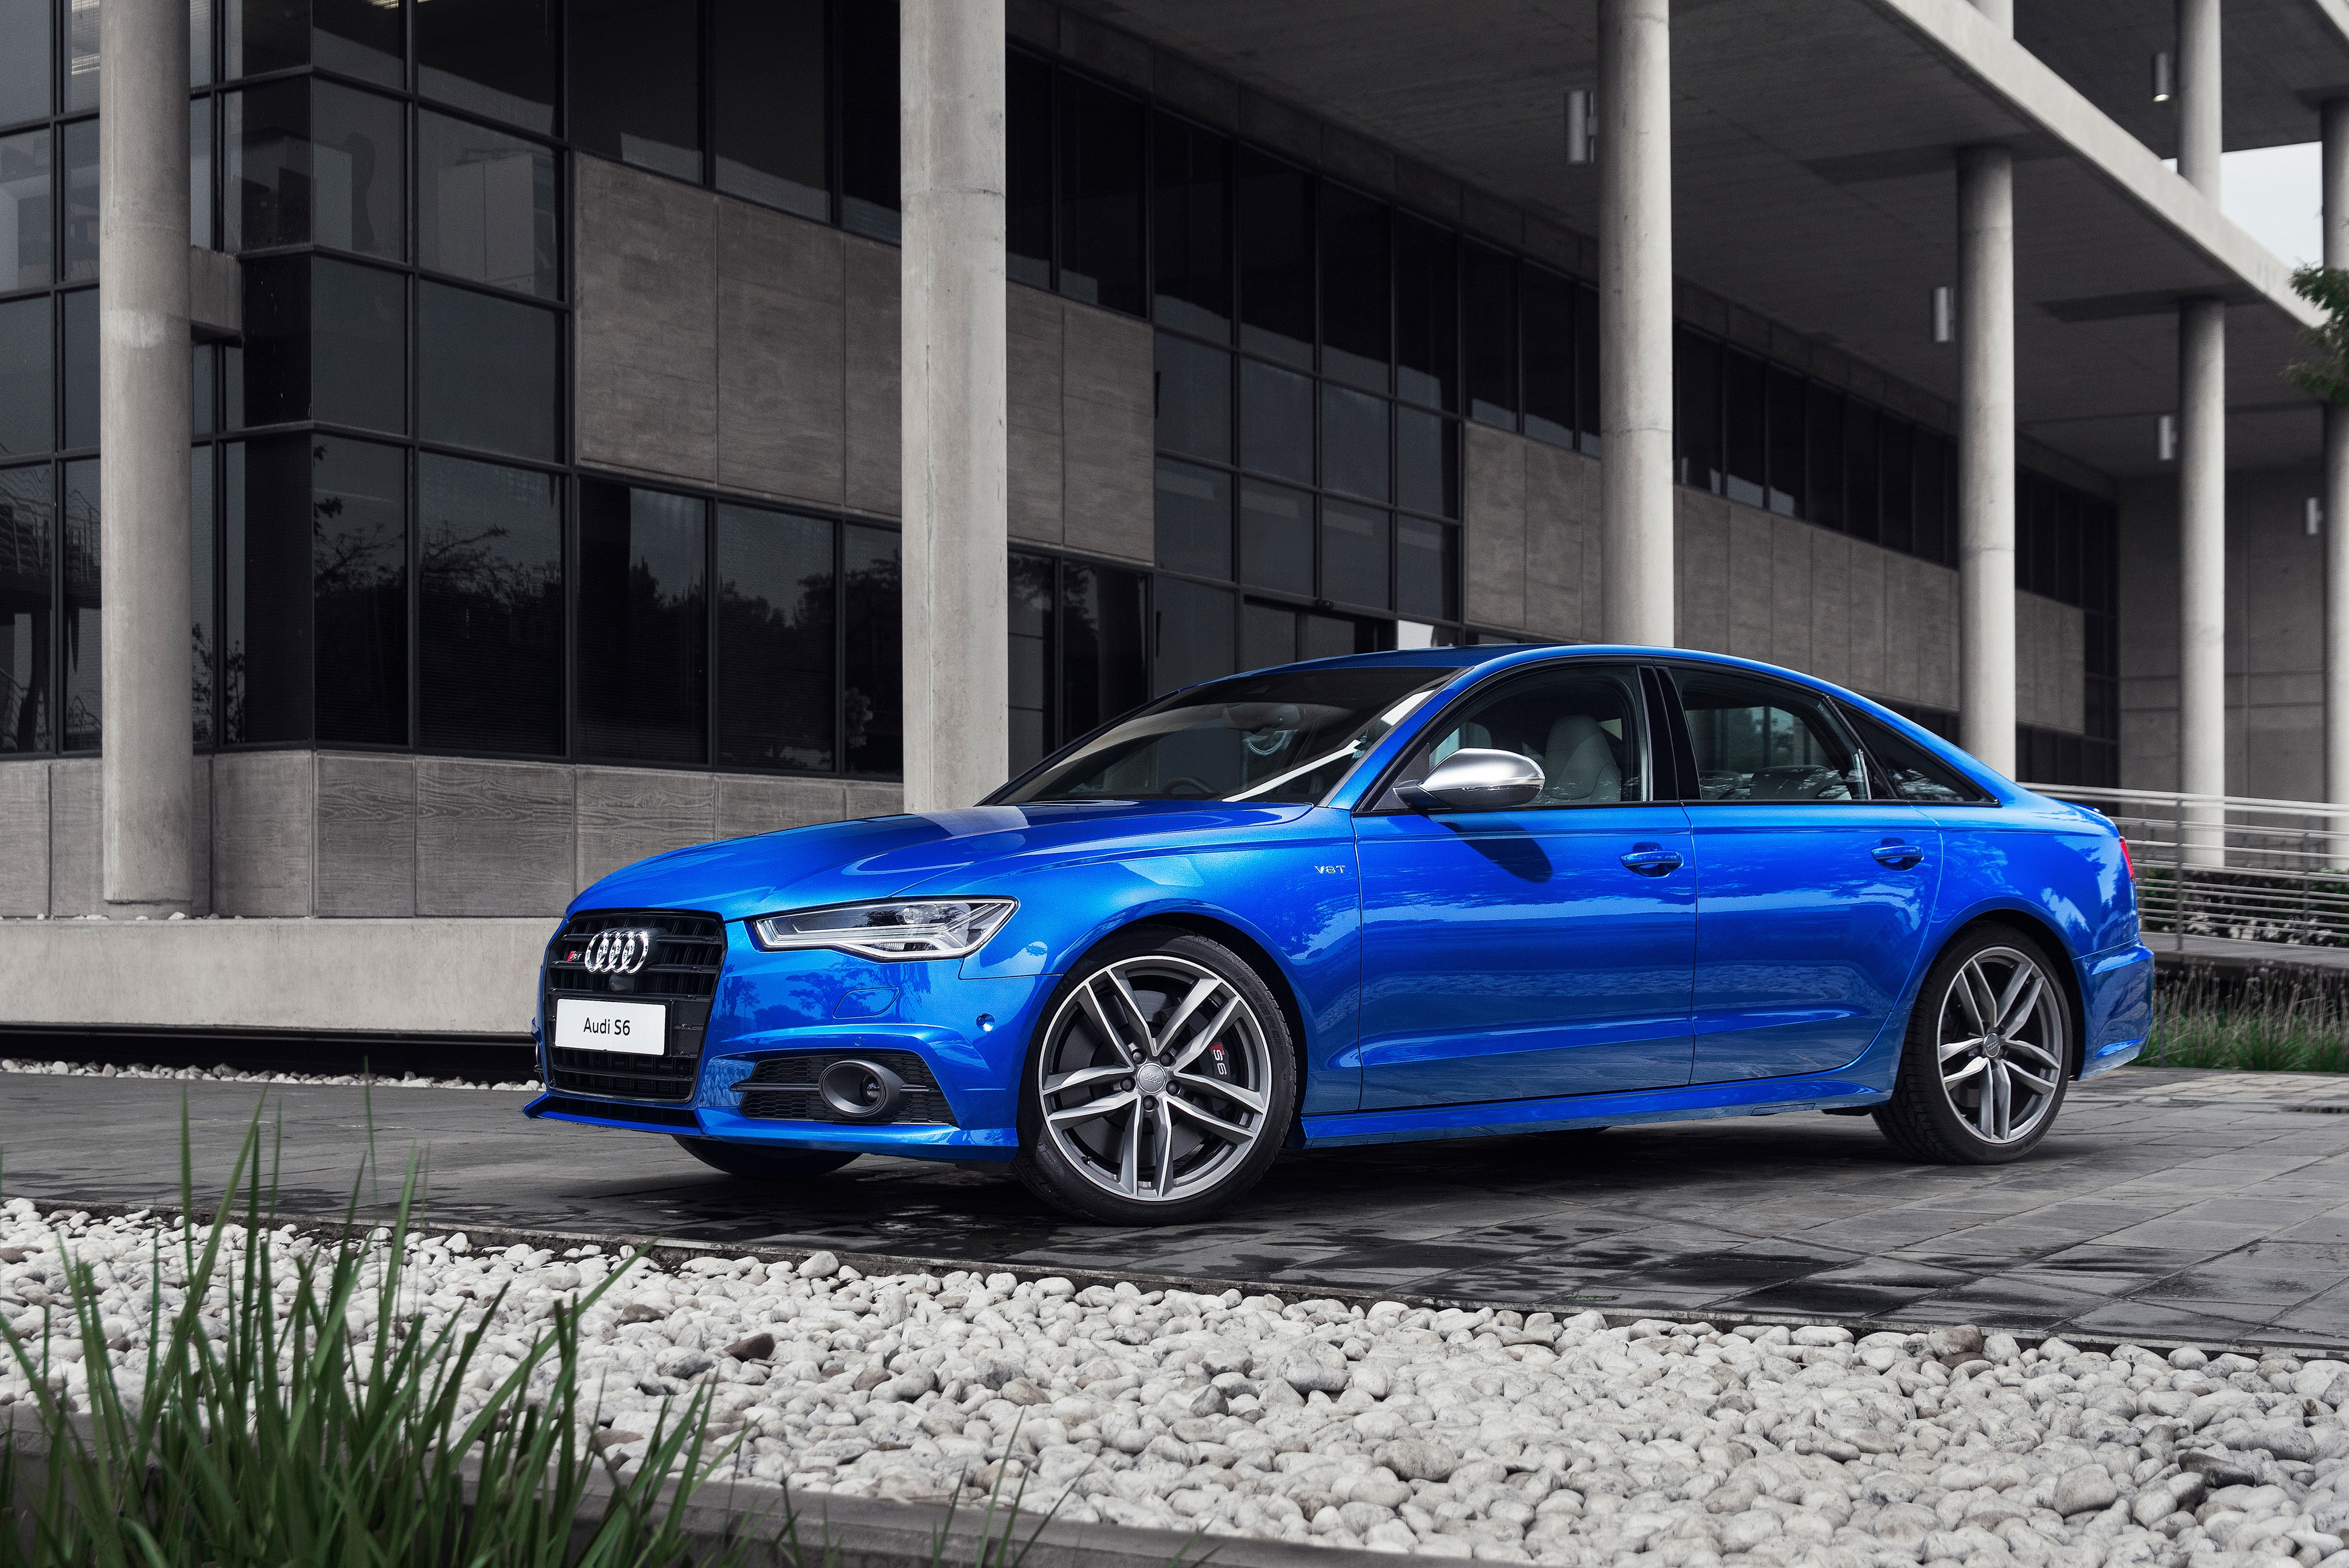 Audi S6 interior specifications